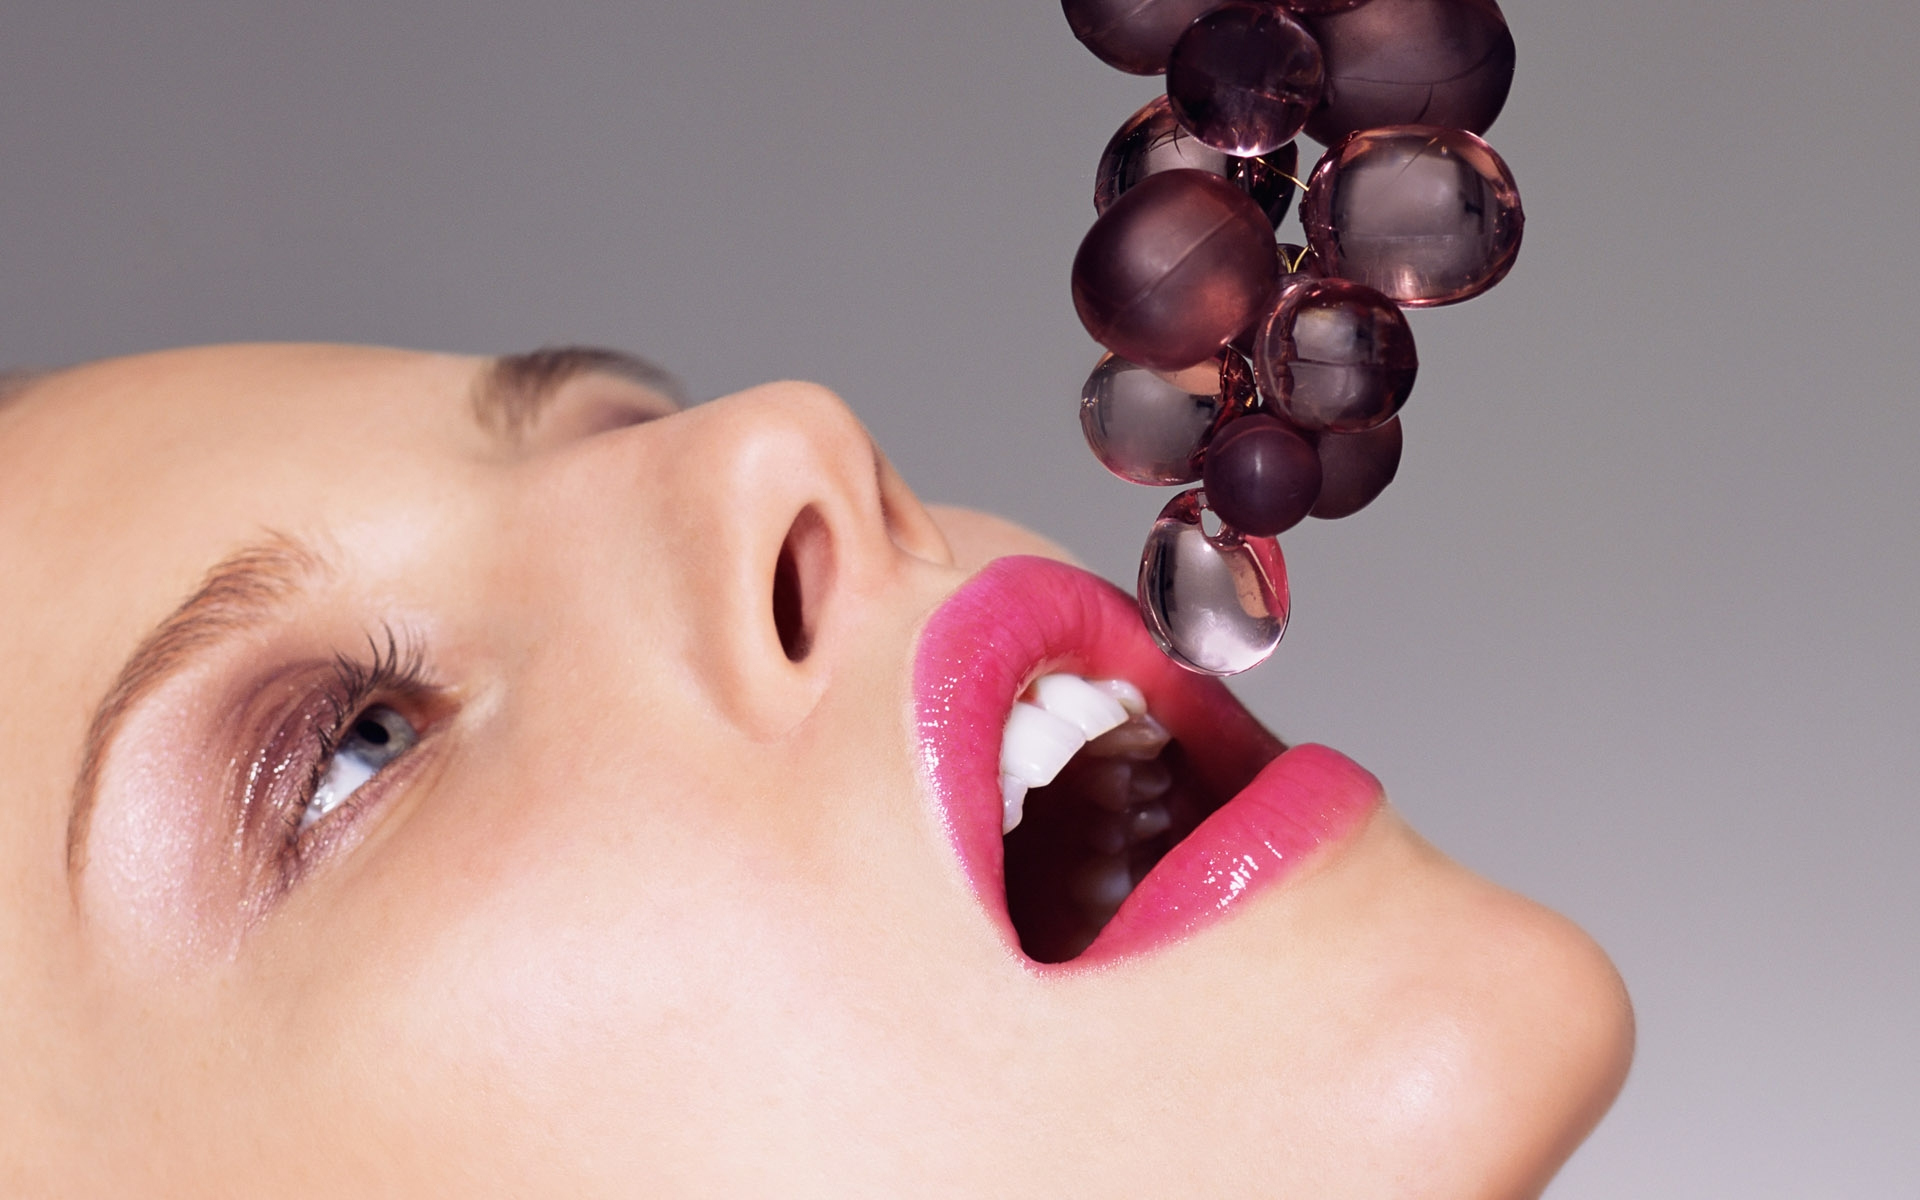 Девушка есть виноград. Губы и виноград. Девушка ест виноград. Девушка с виноградом во рту. Девушка кормит виноградом.